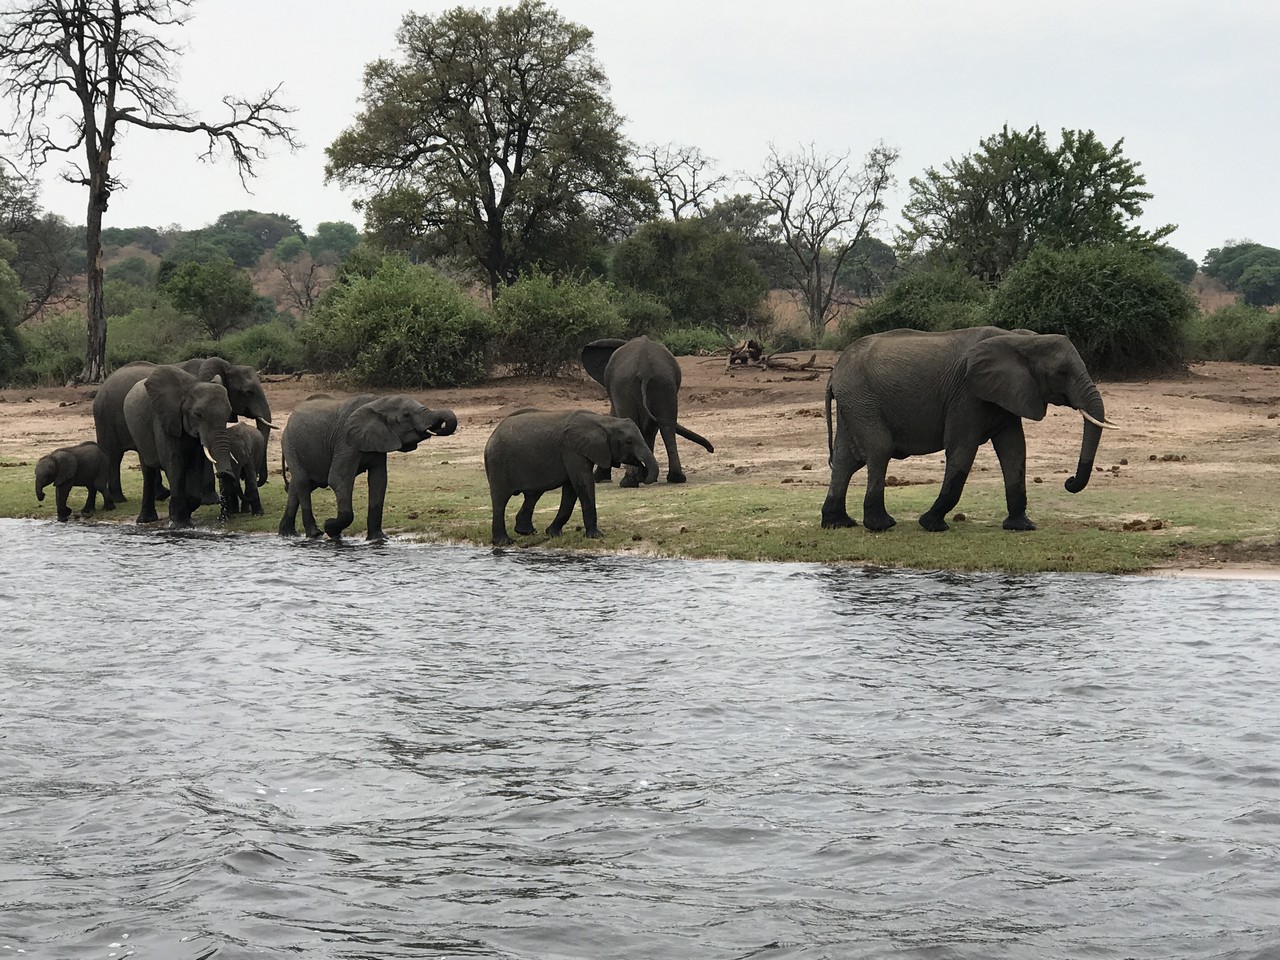 a group of elephants walking along a river